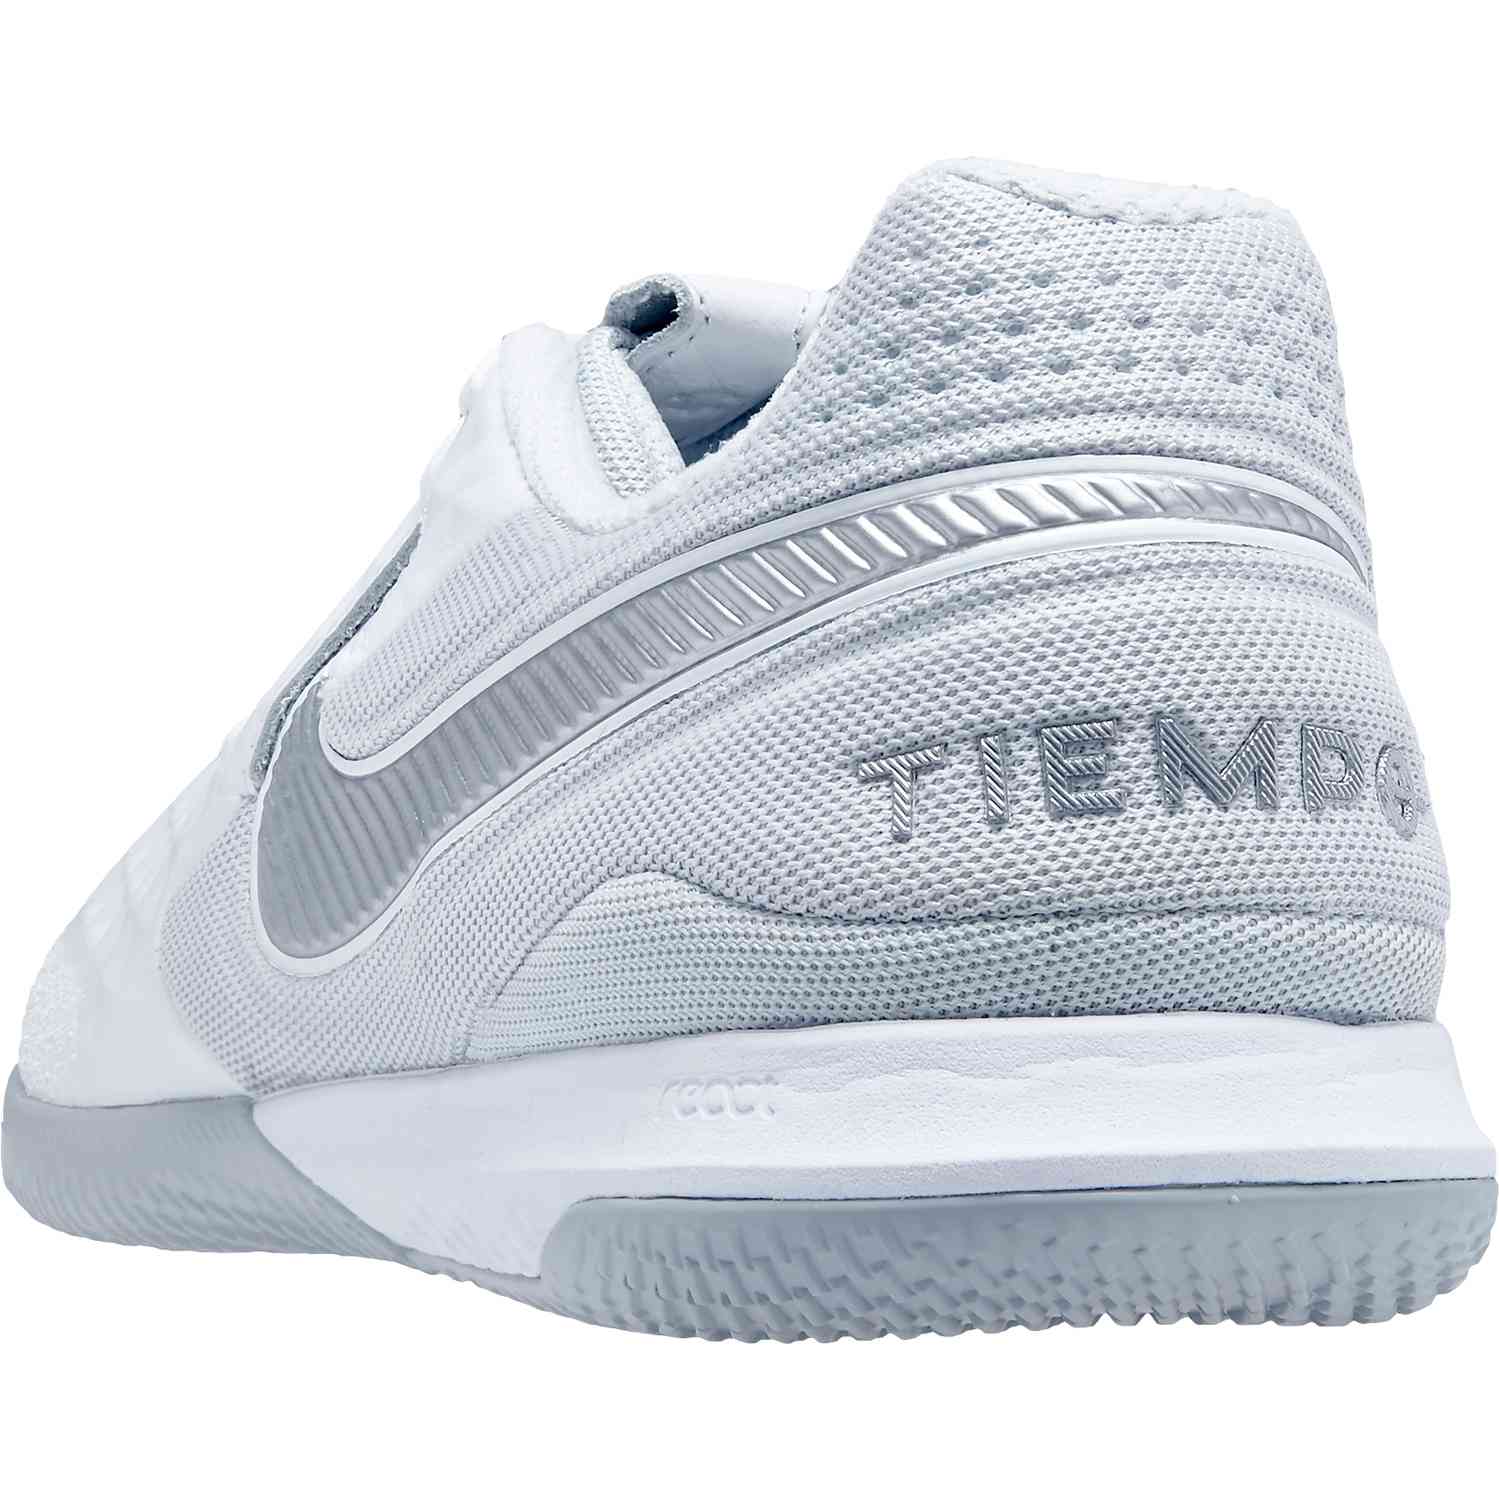 Nike Tiempo Legend VIII Pro AGPRO football boots.